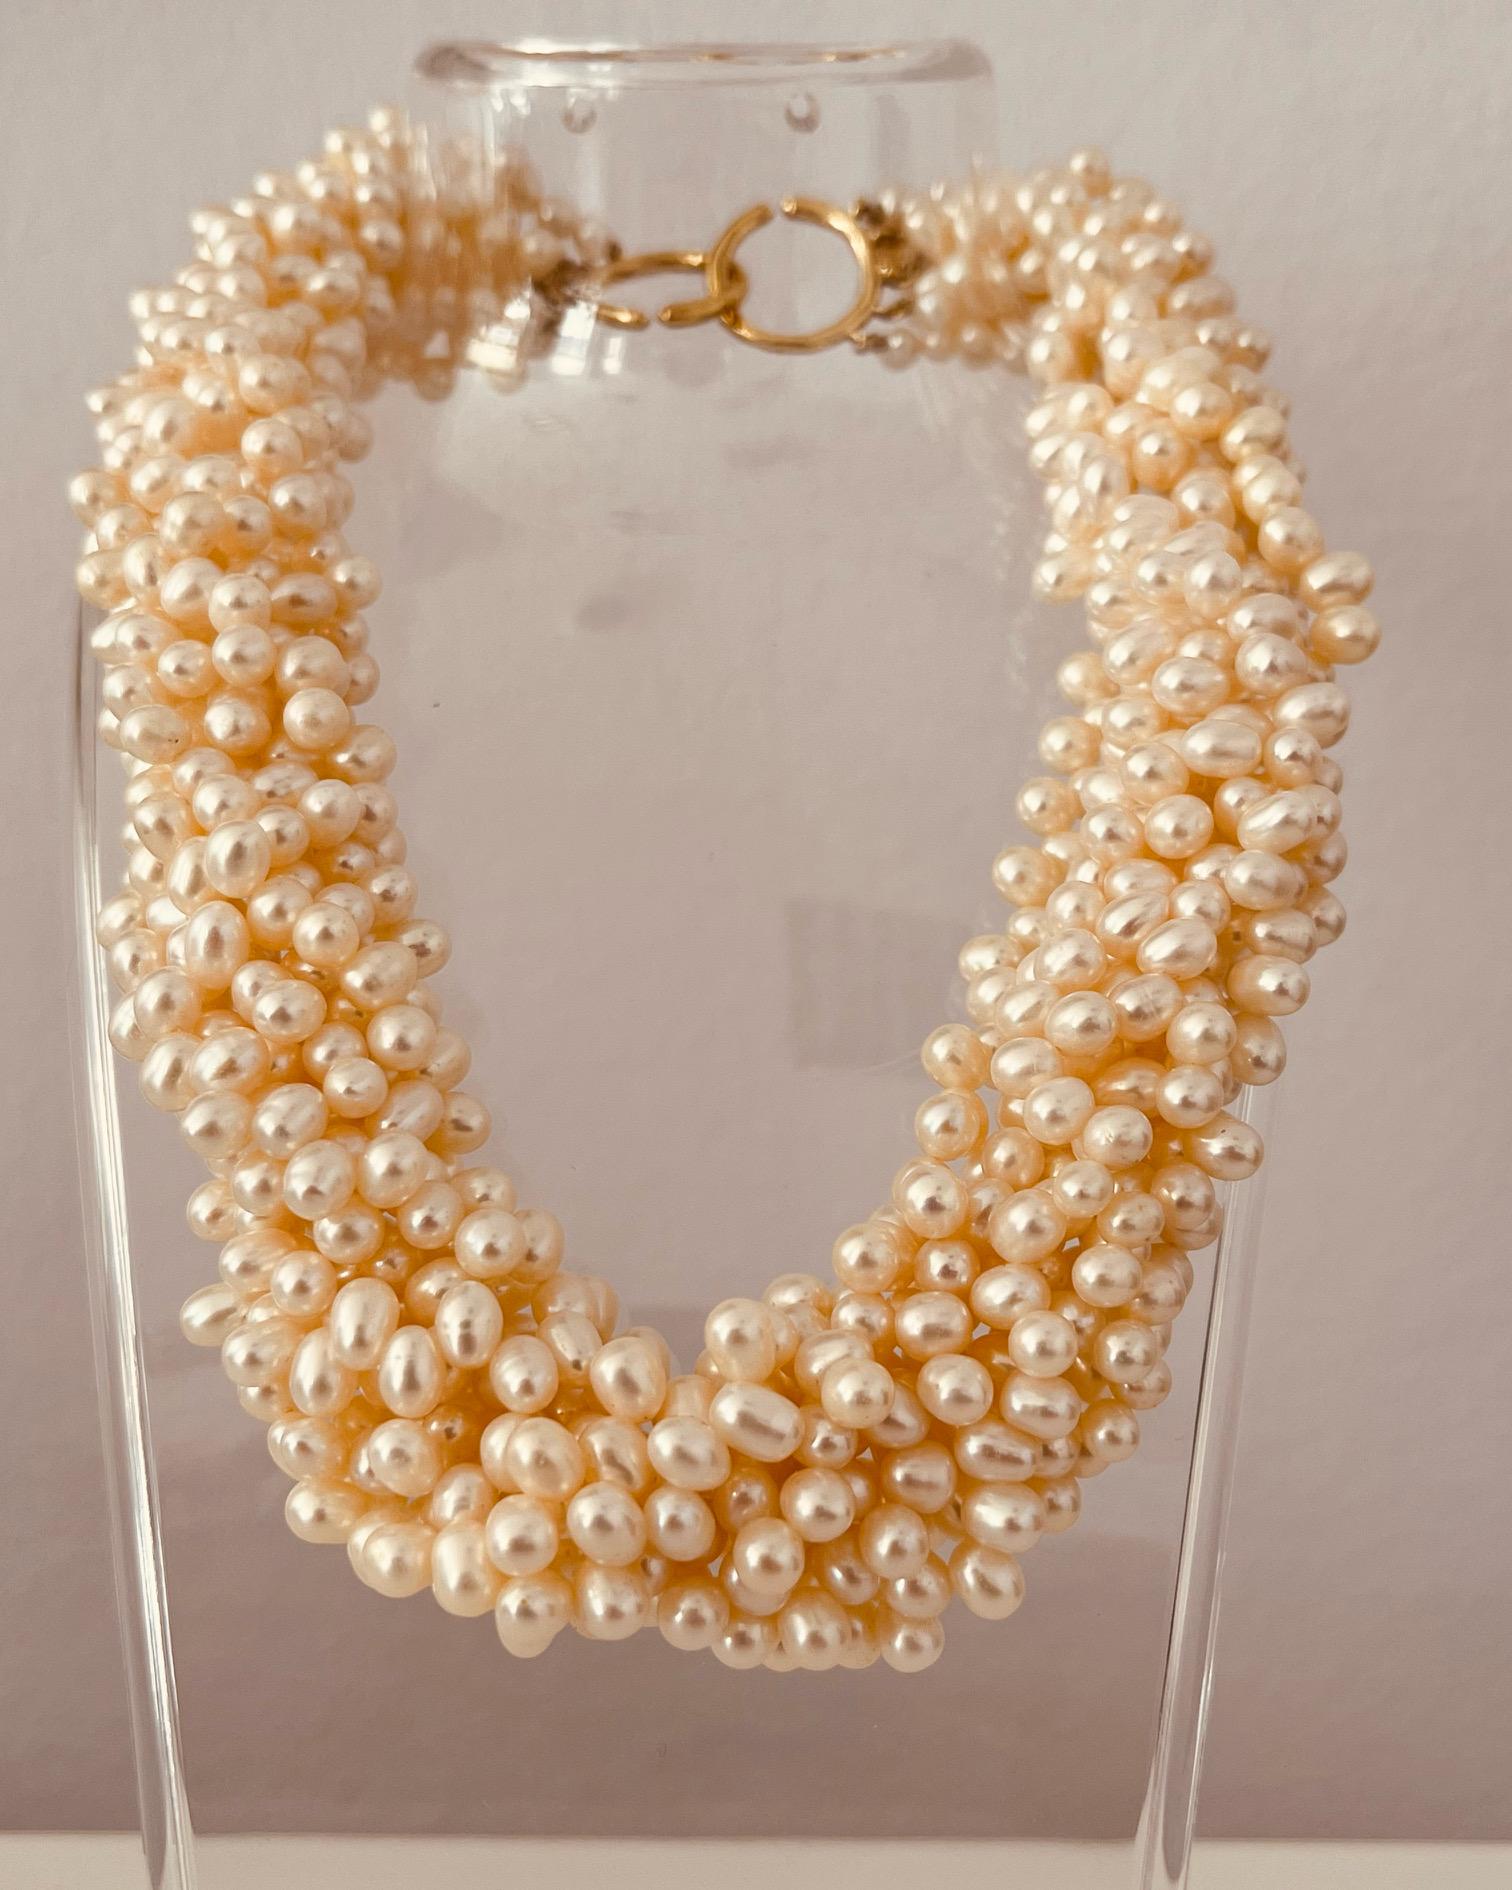 tiffany black pearl necklace